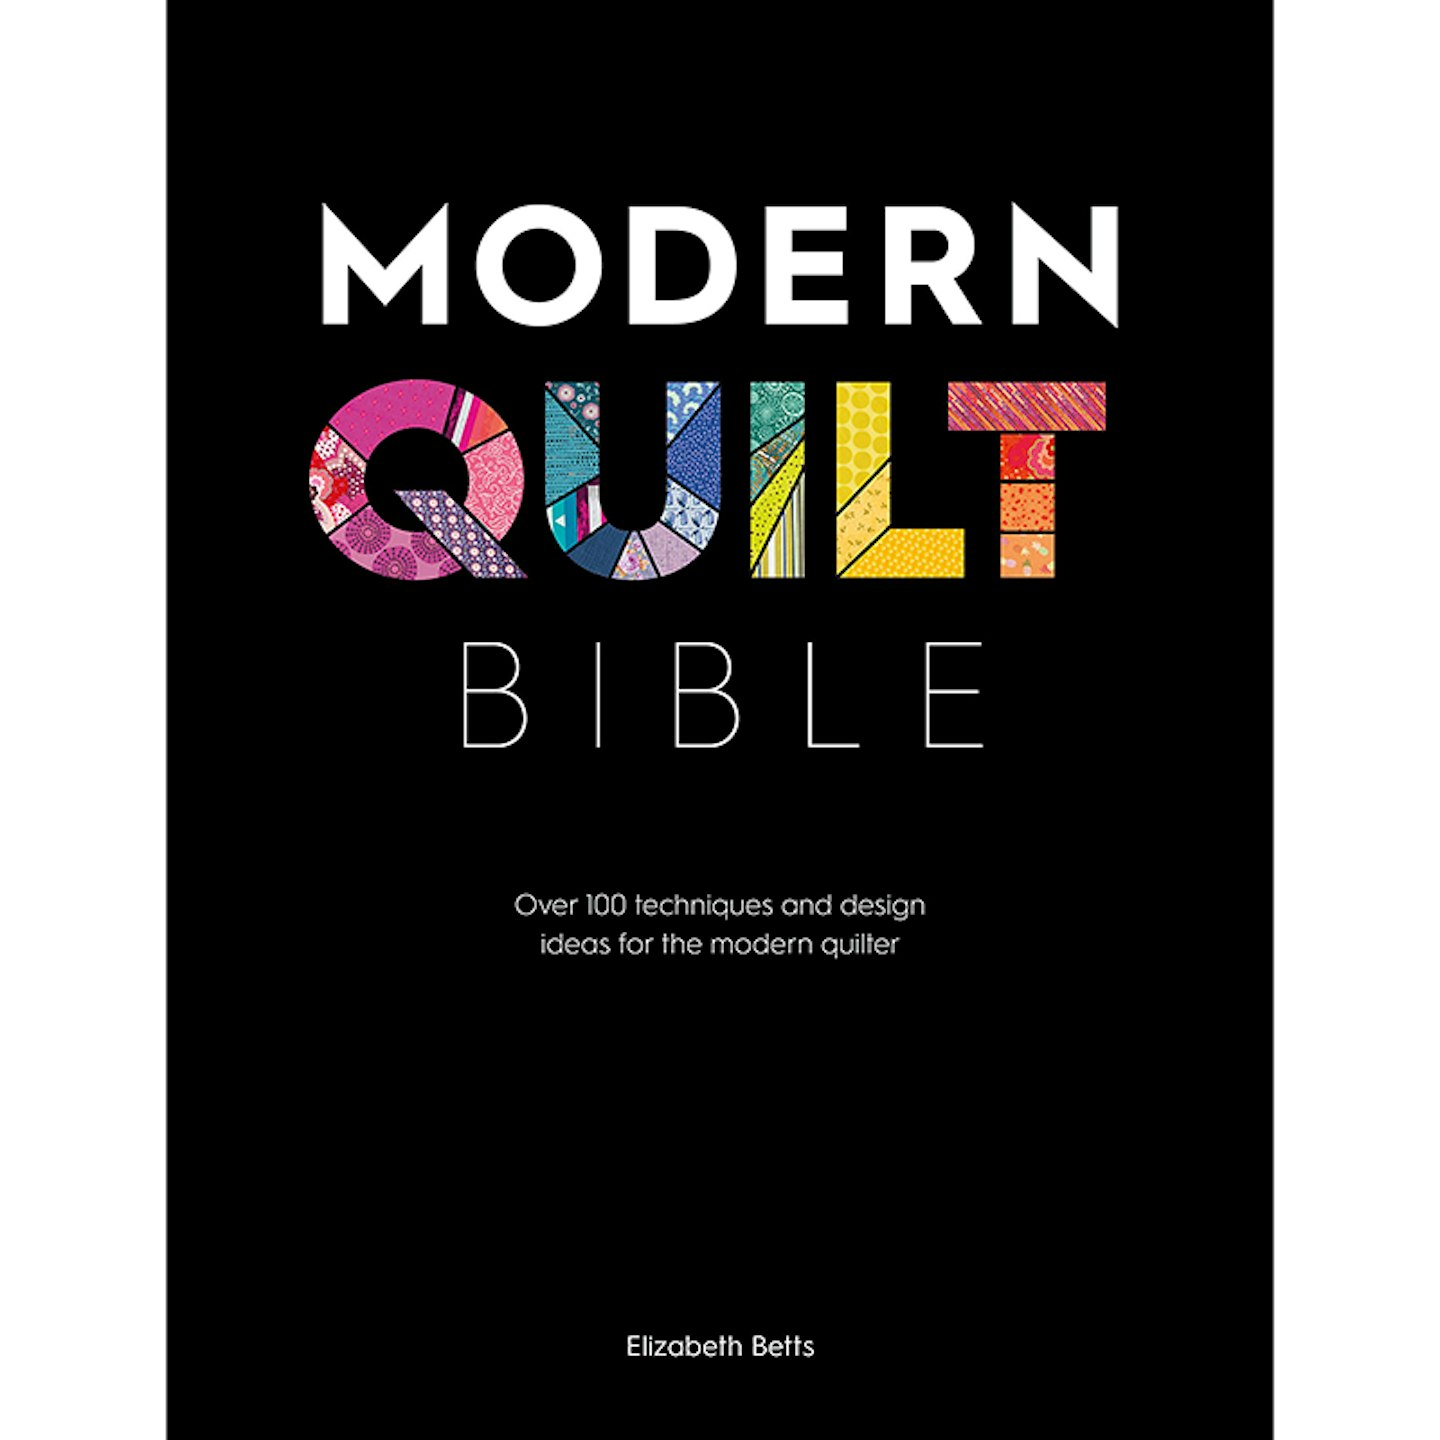 Modern Quilt Bible by Elizabeth Betts